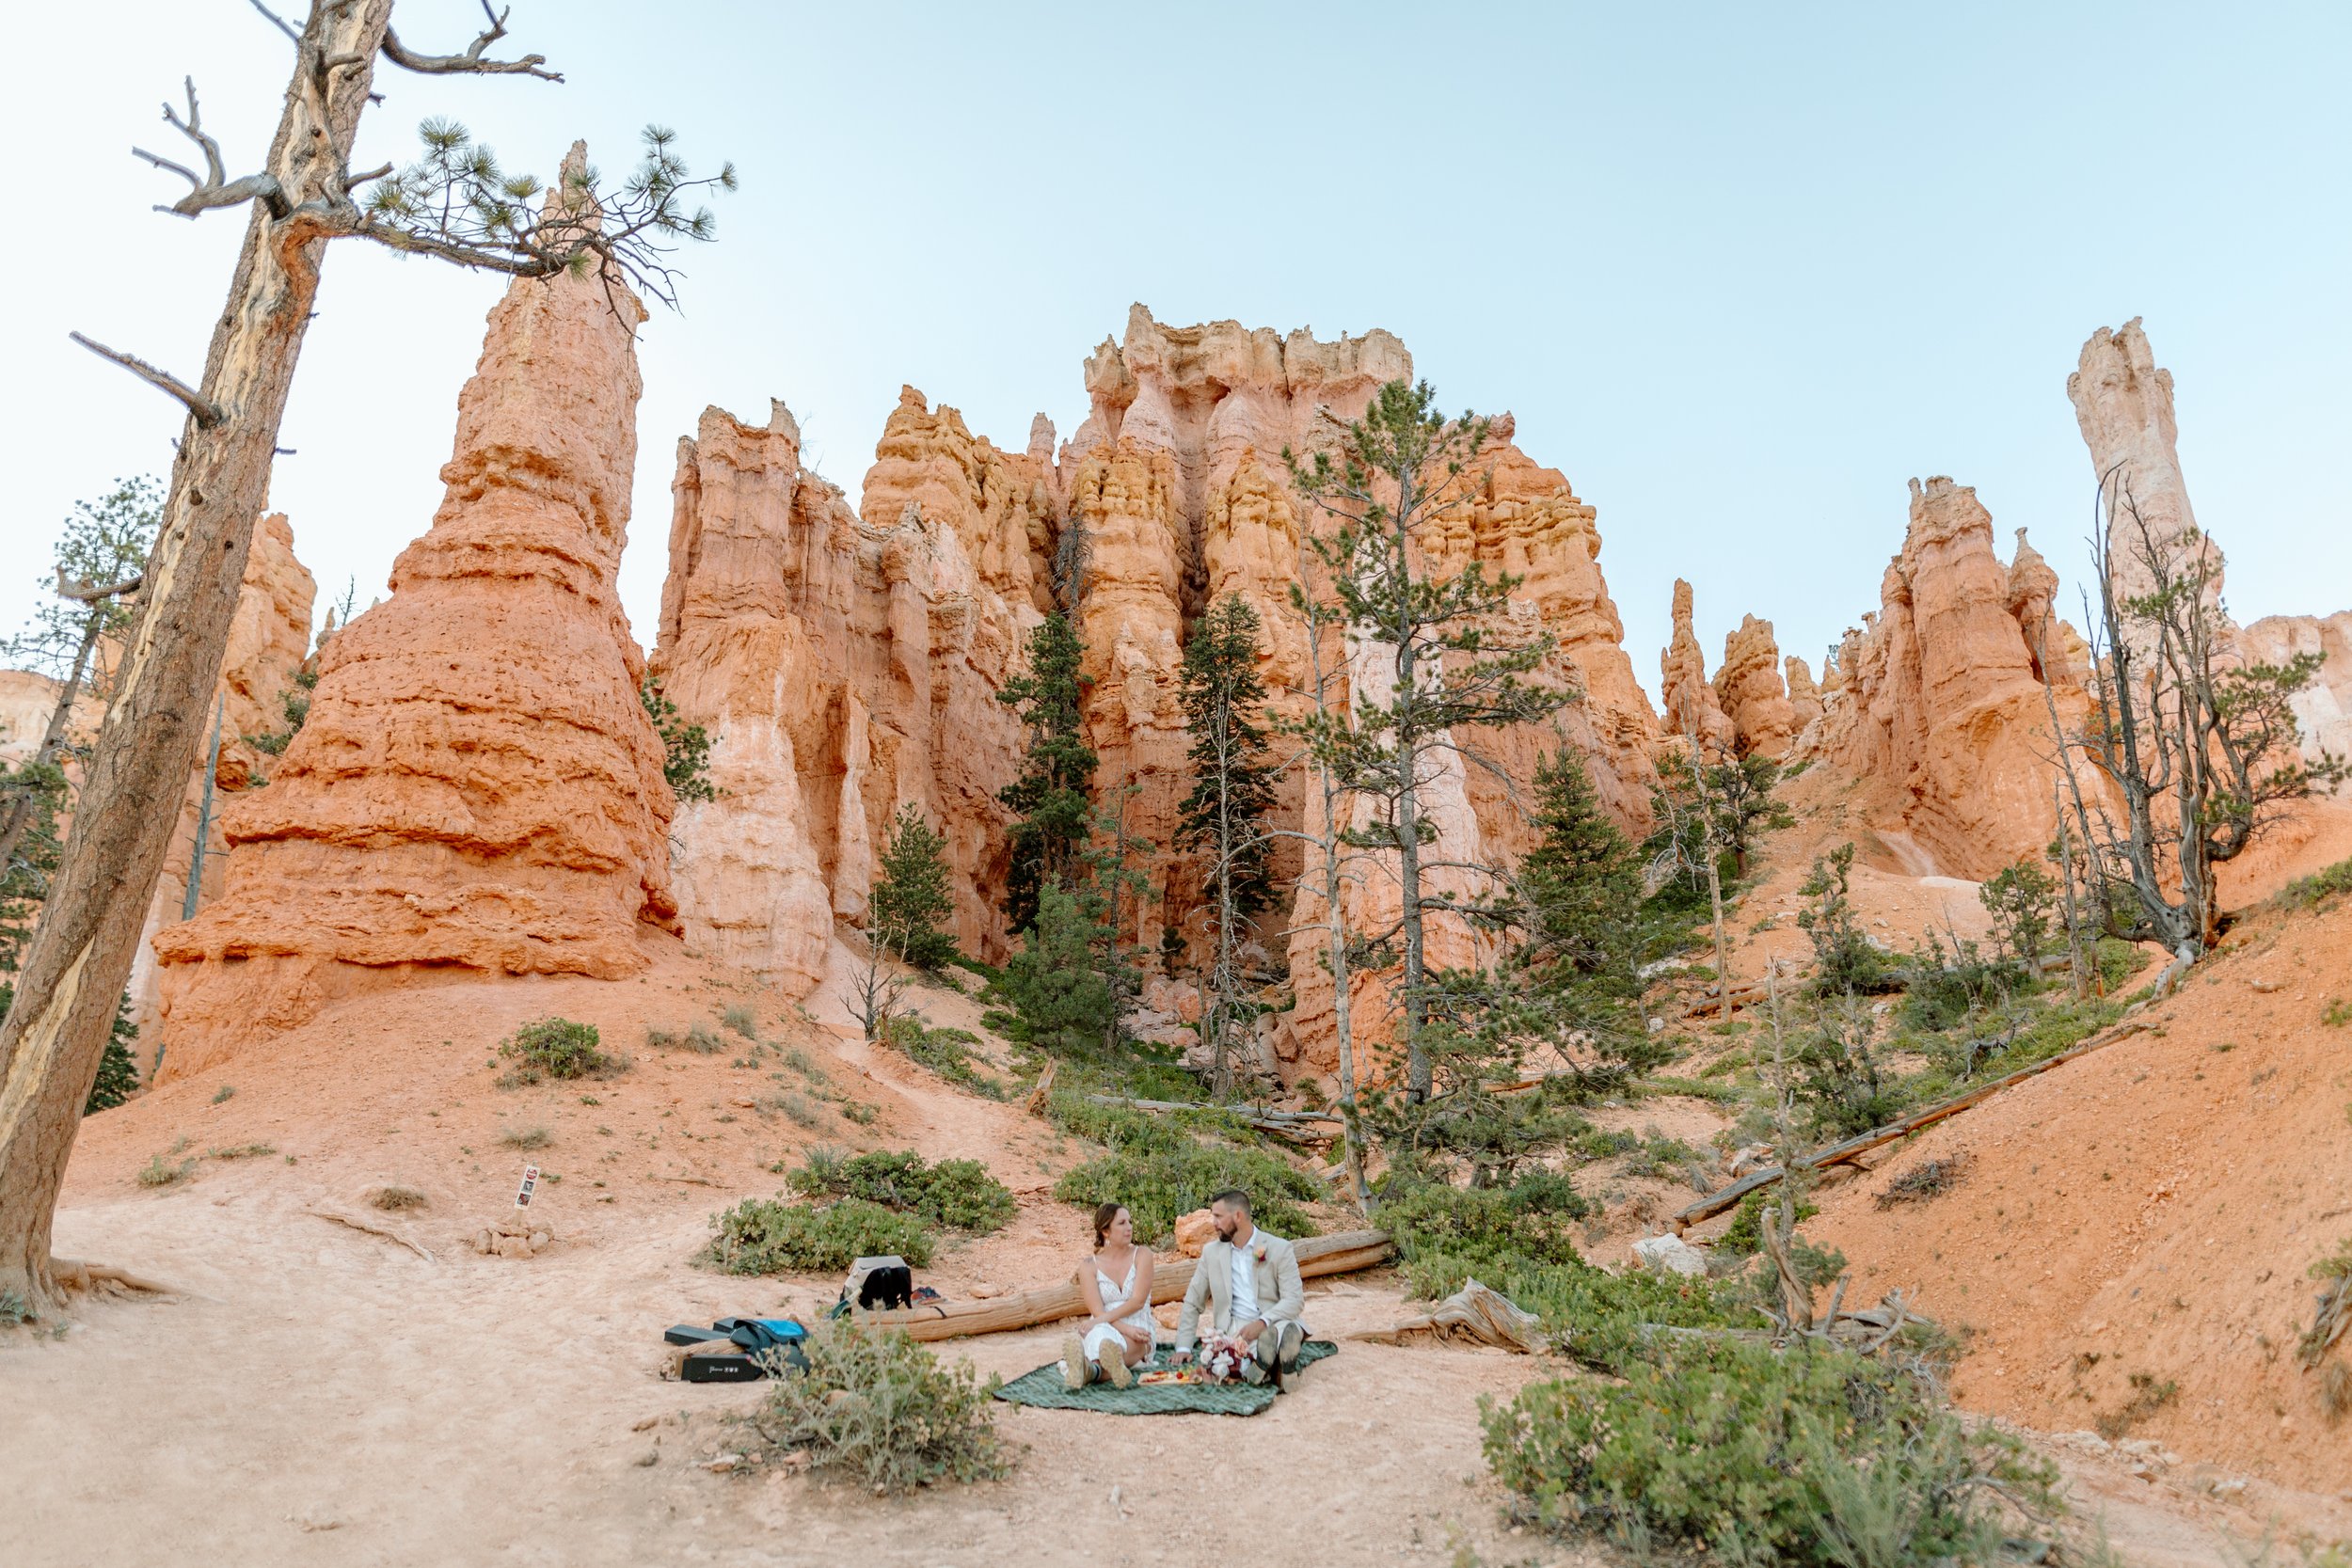  utah elopement couple shares a picnic at bryce canyon national park 